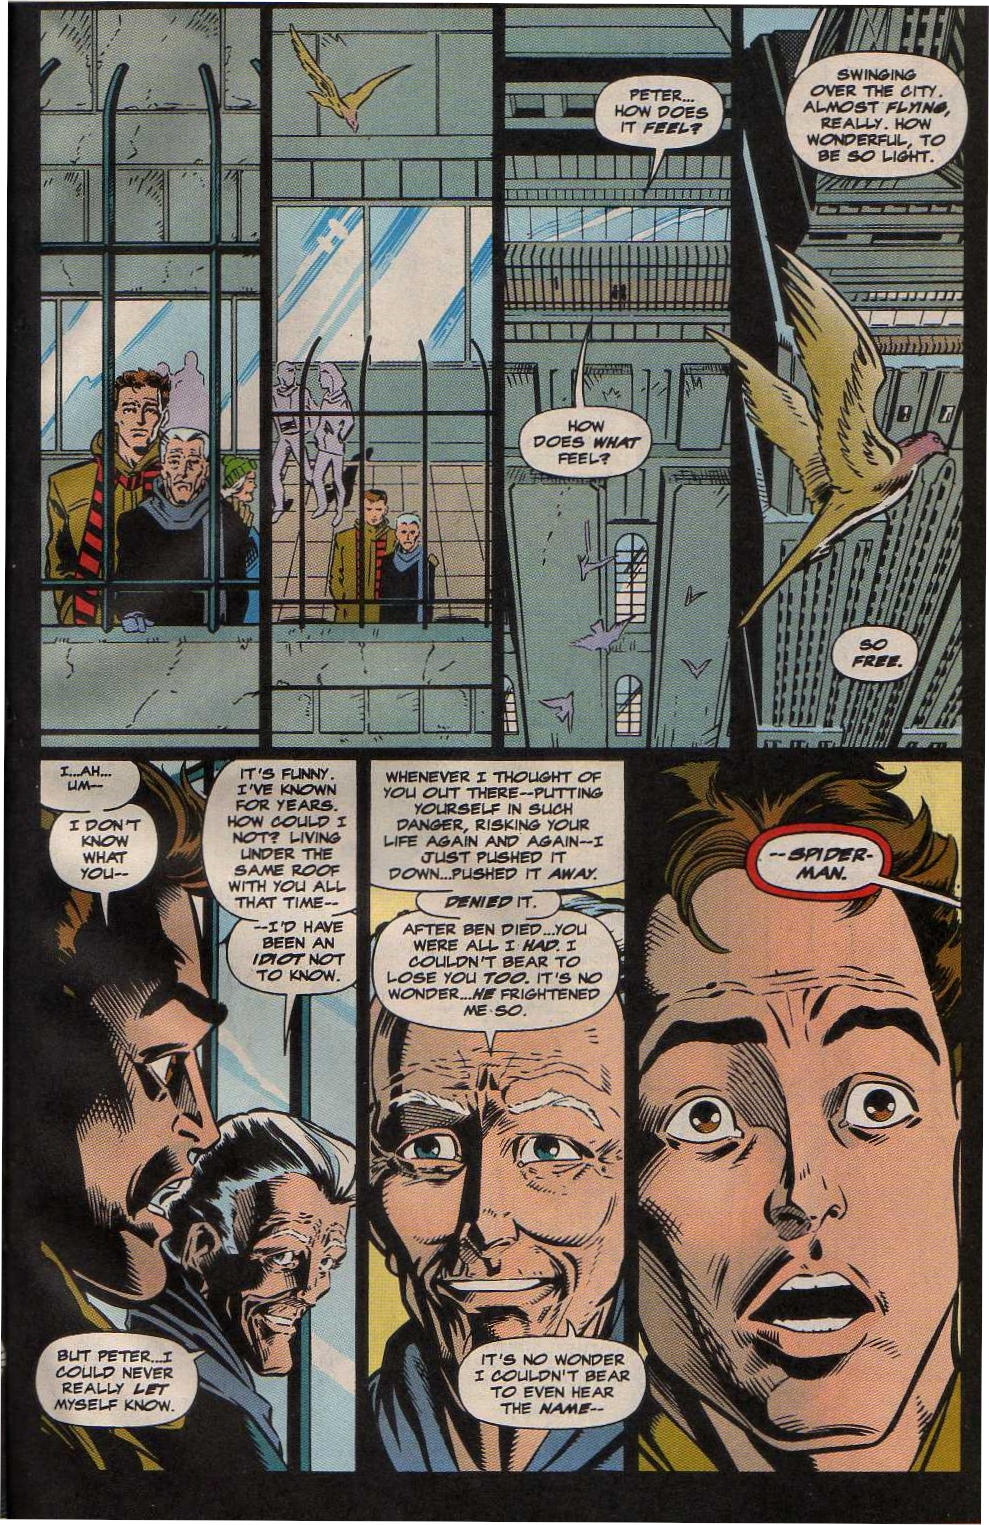 Amazing Spider-Man (Vol. 1) #400 (Story 1) [in Comics & Books] @  SpiderFan.org